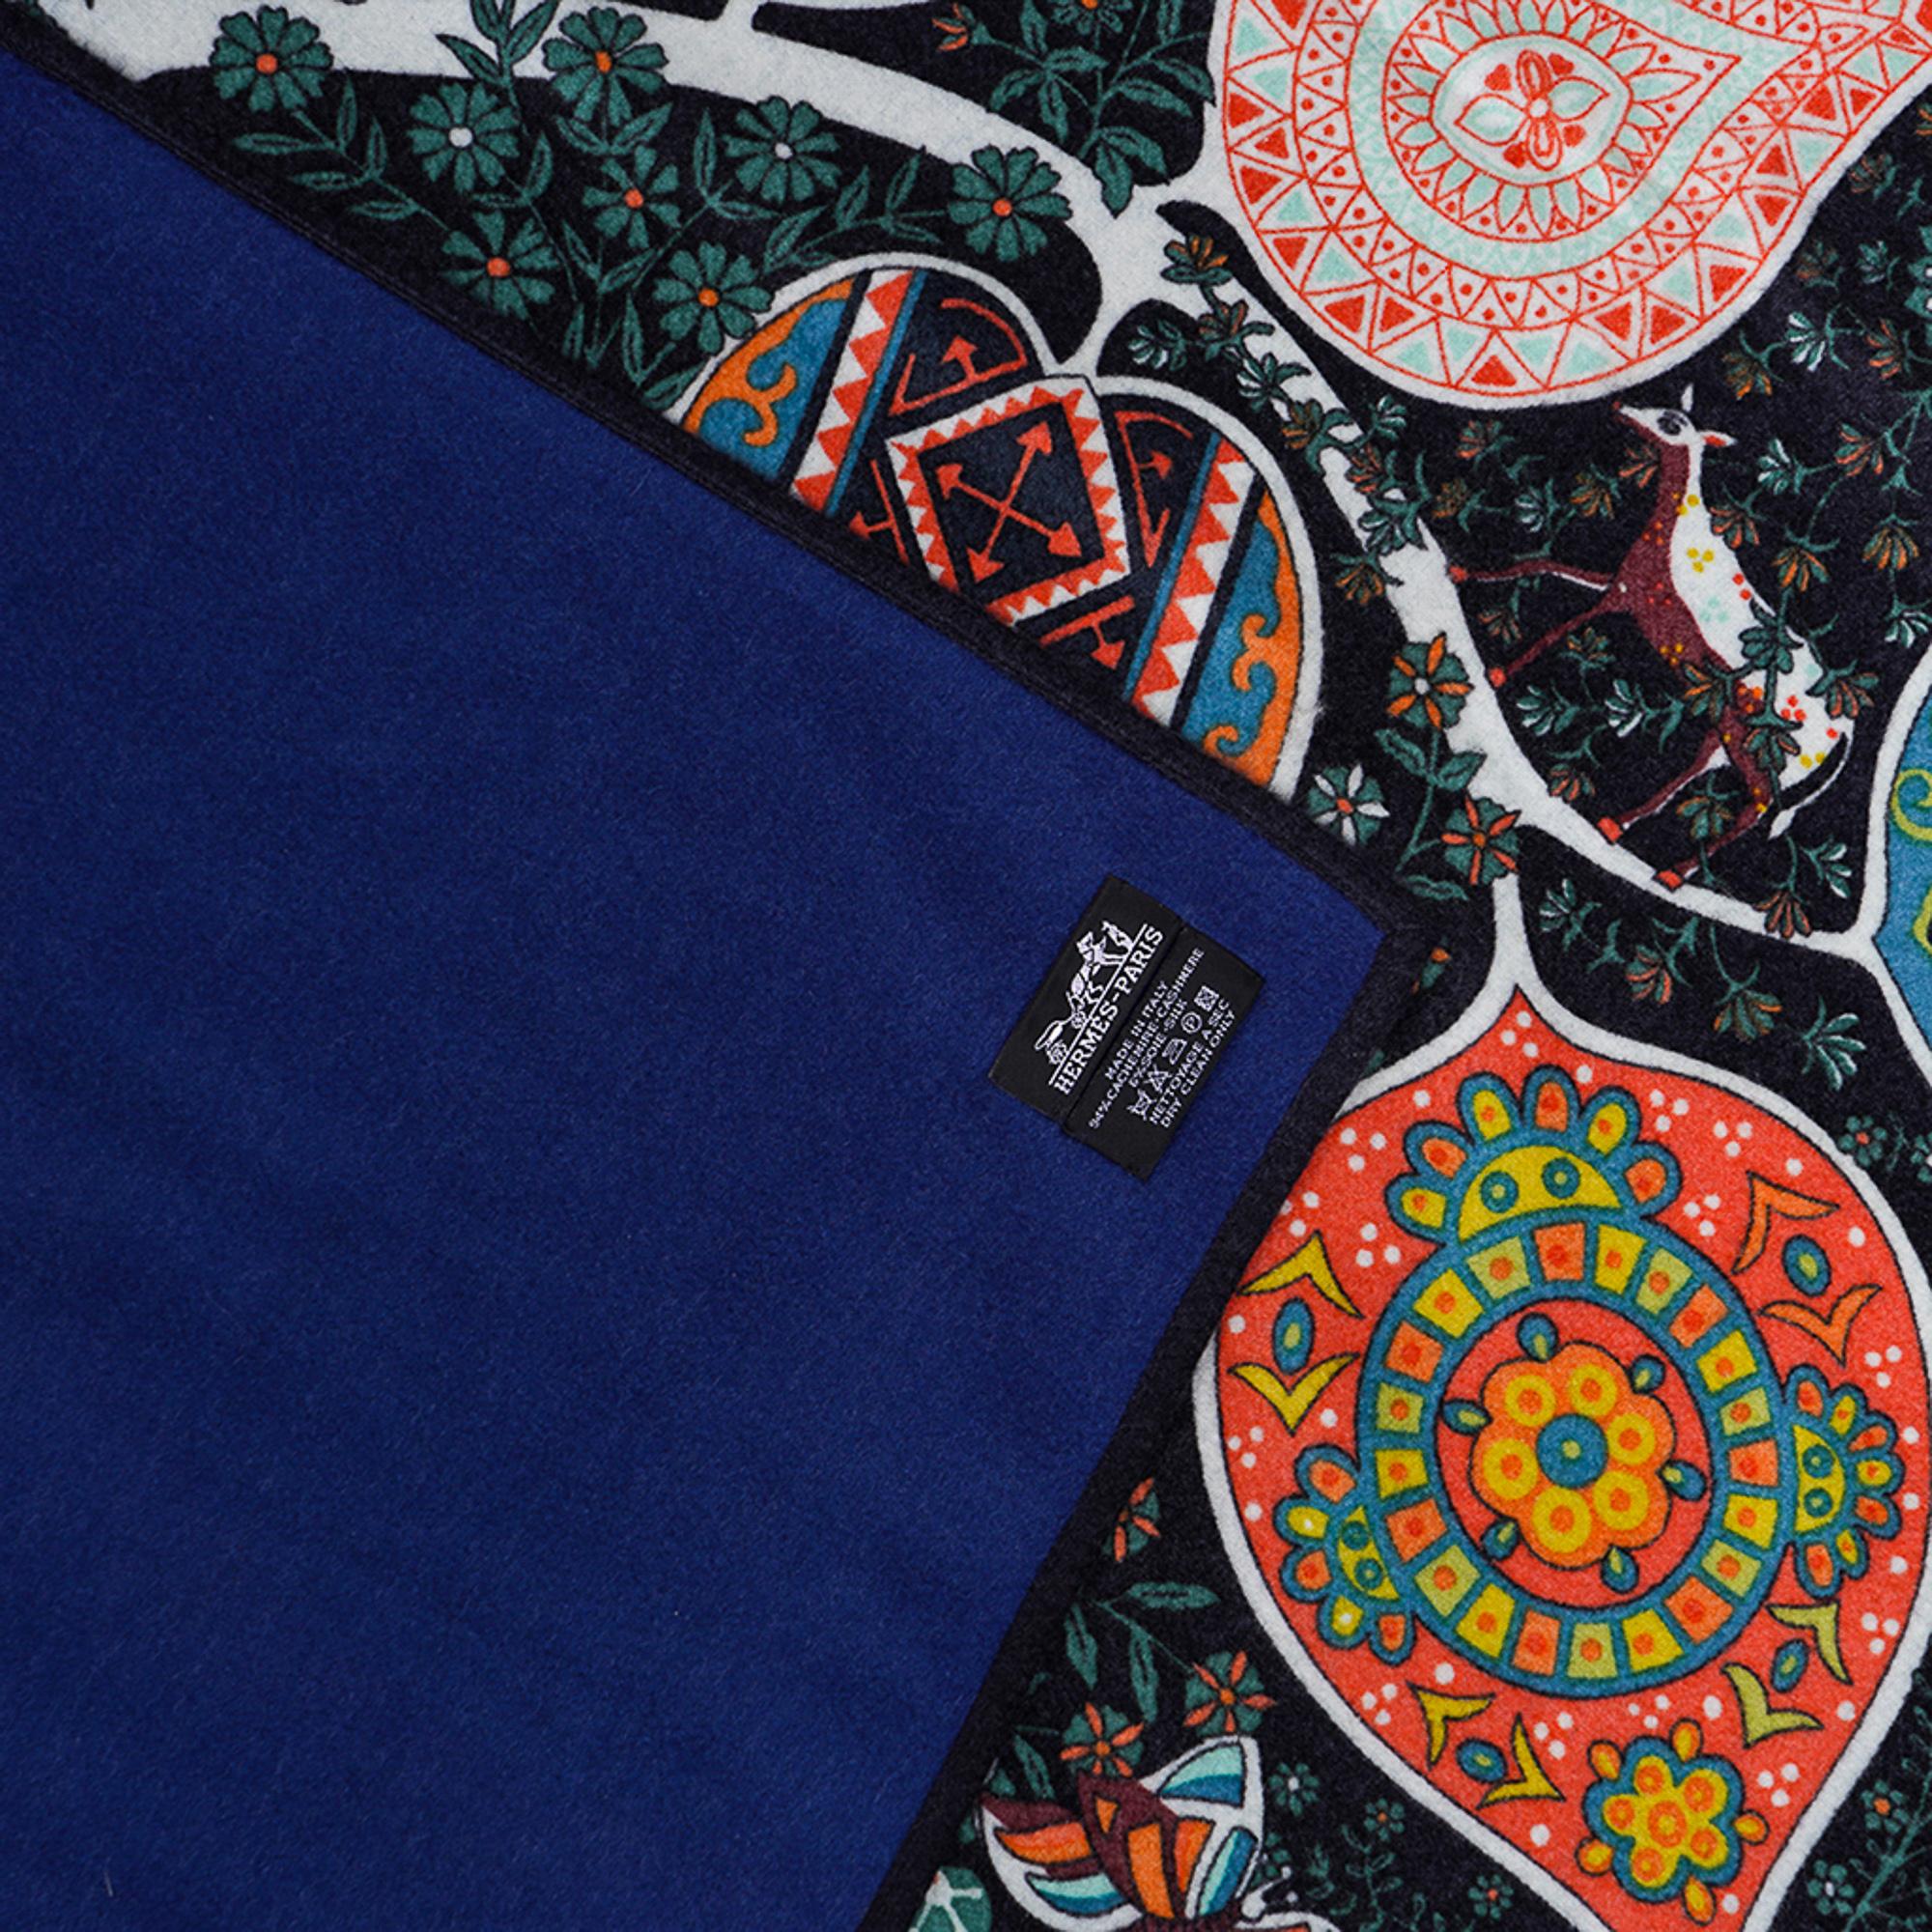 Hermes Blanket Tree of Life Blanket Multicolored Cashmere / Silk New 14